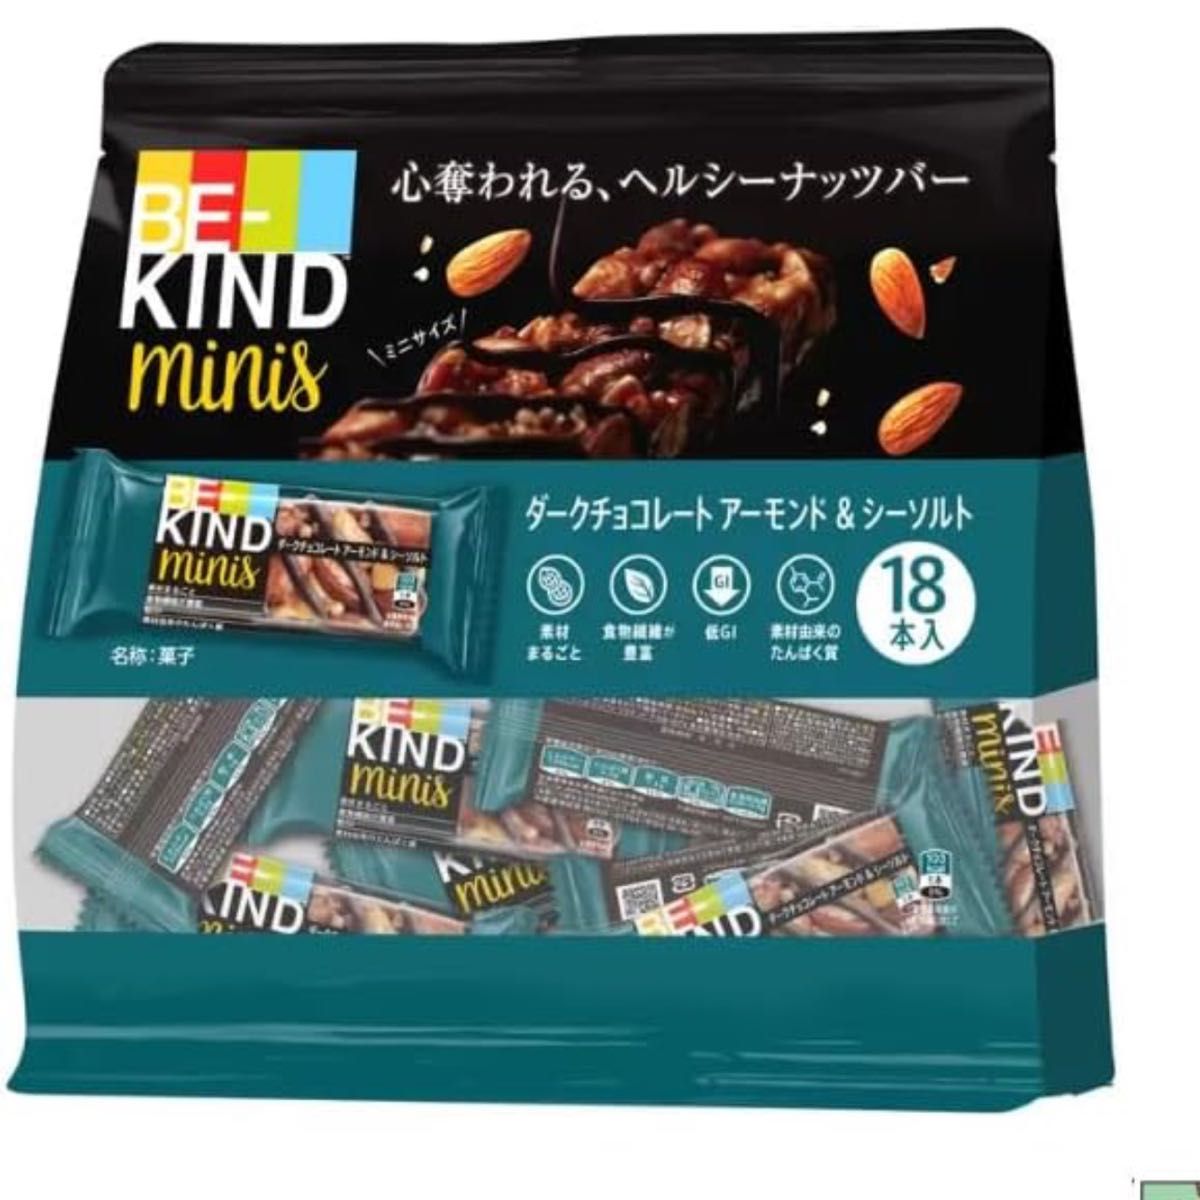 BE-KIND minis BAR ダークチョコレートアーモンド＆シーソルト18本入